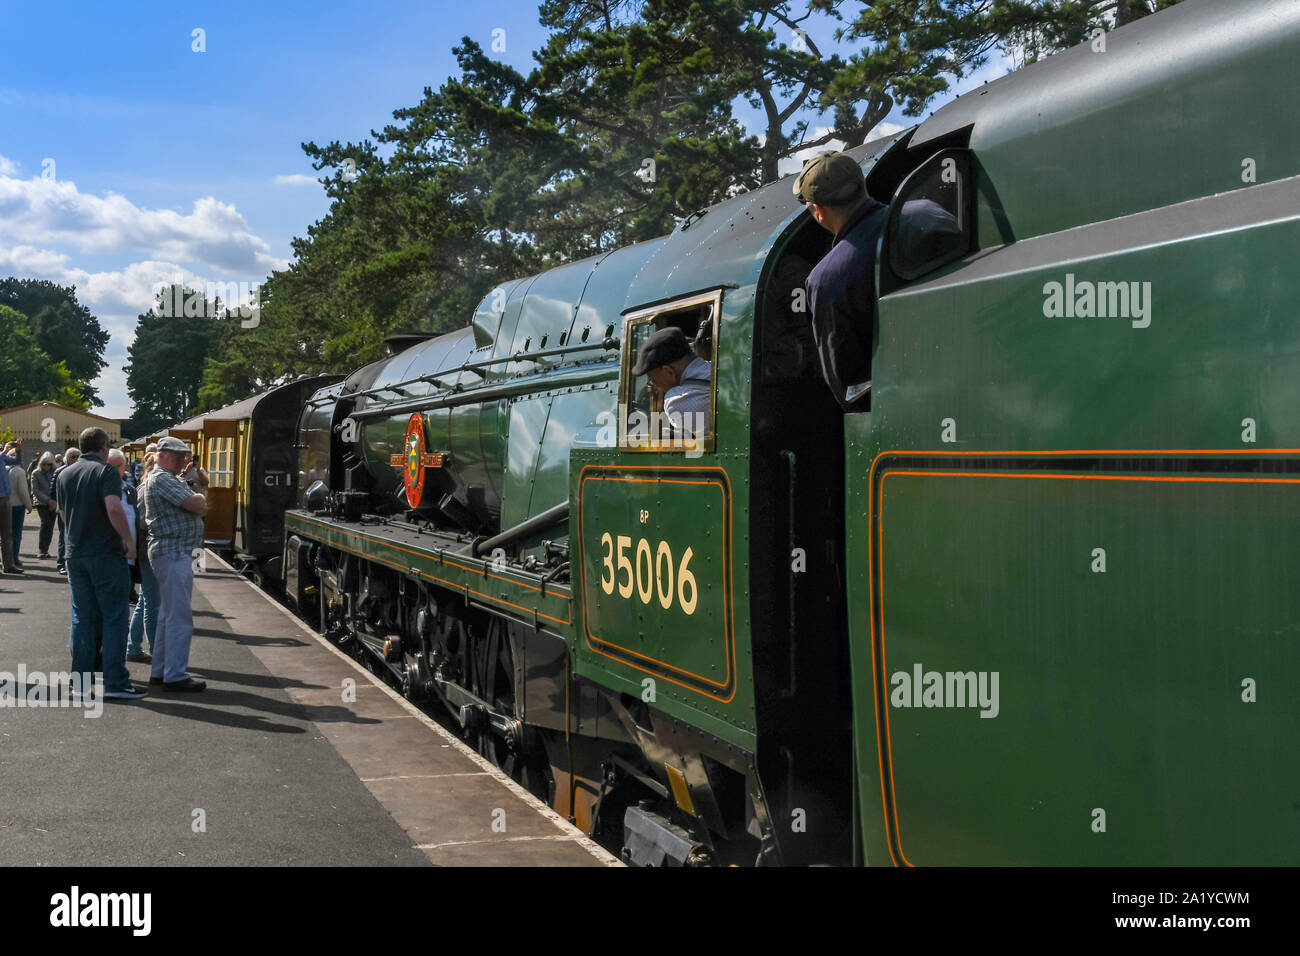 CHELTENHAM, ENGLAND - SEPTEMBER 2019: The driver of the Peninsular and Oriental steam locomotive at Cheltenham Racecourse station Stock Photo